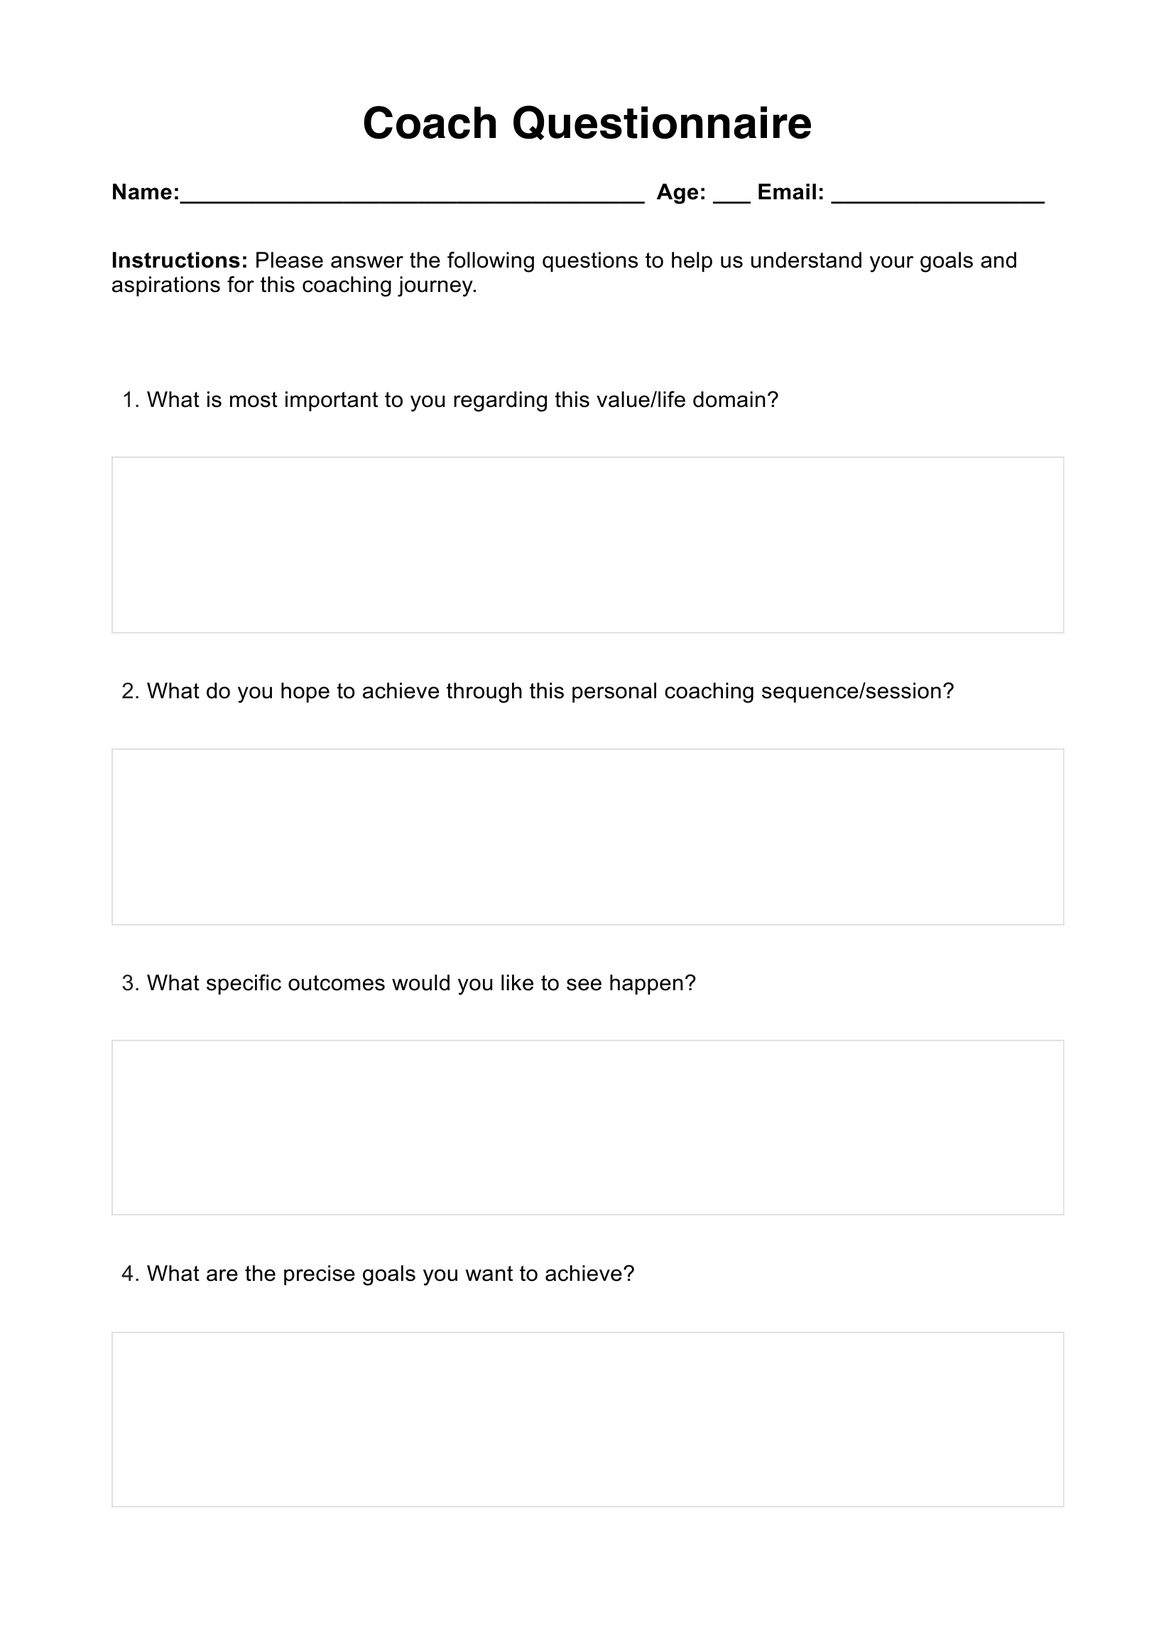 Coach Questionnaire PDF Example